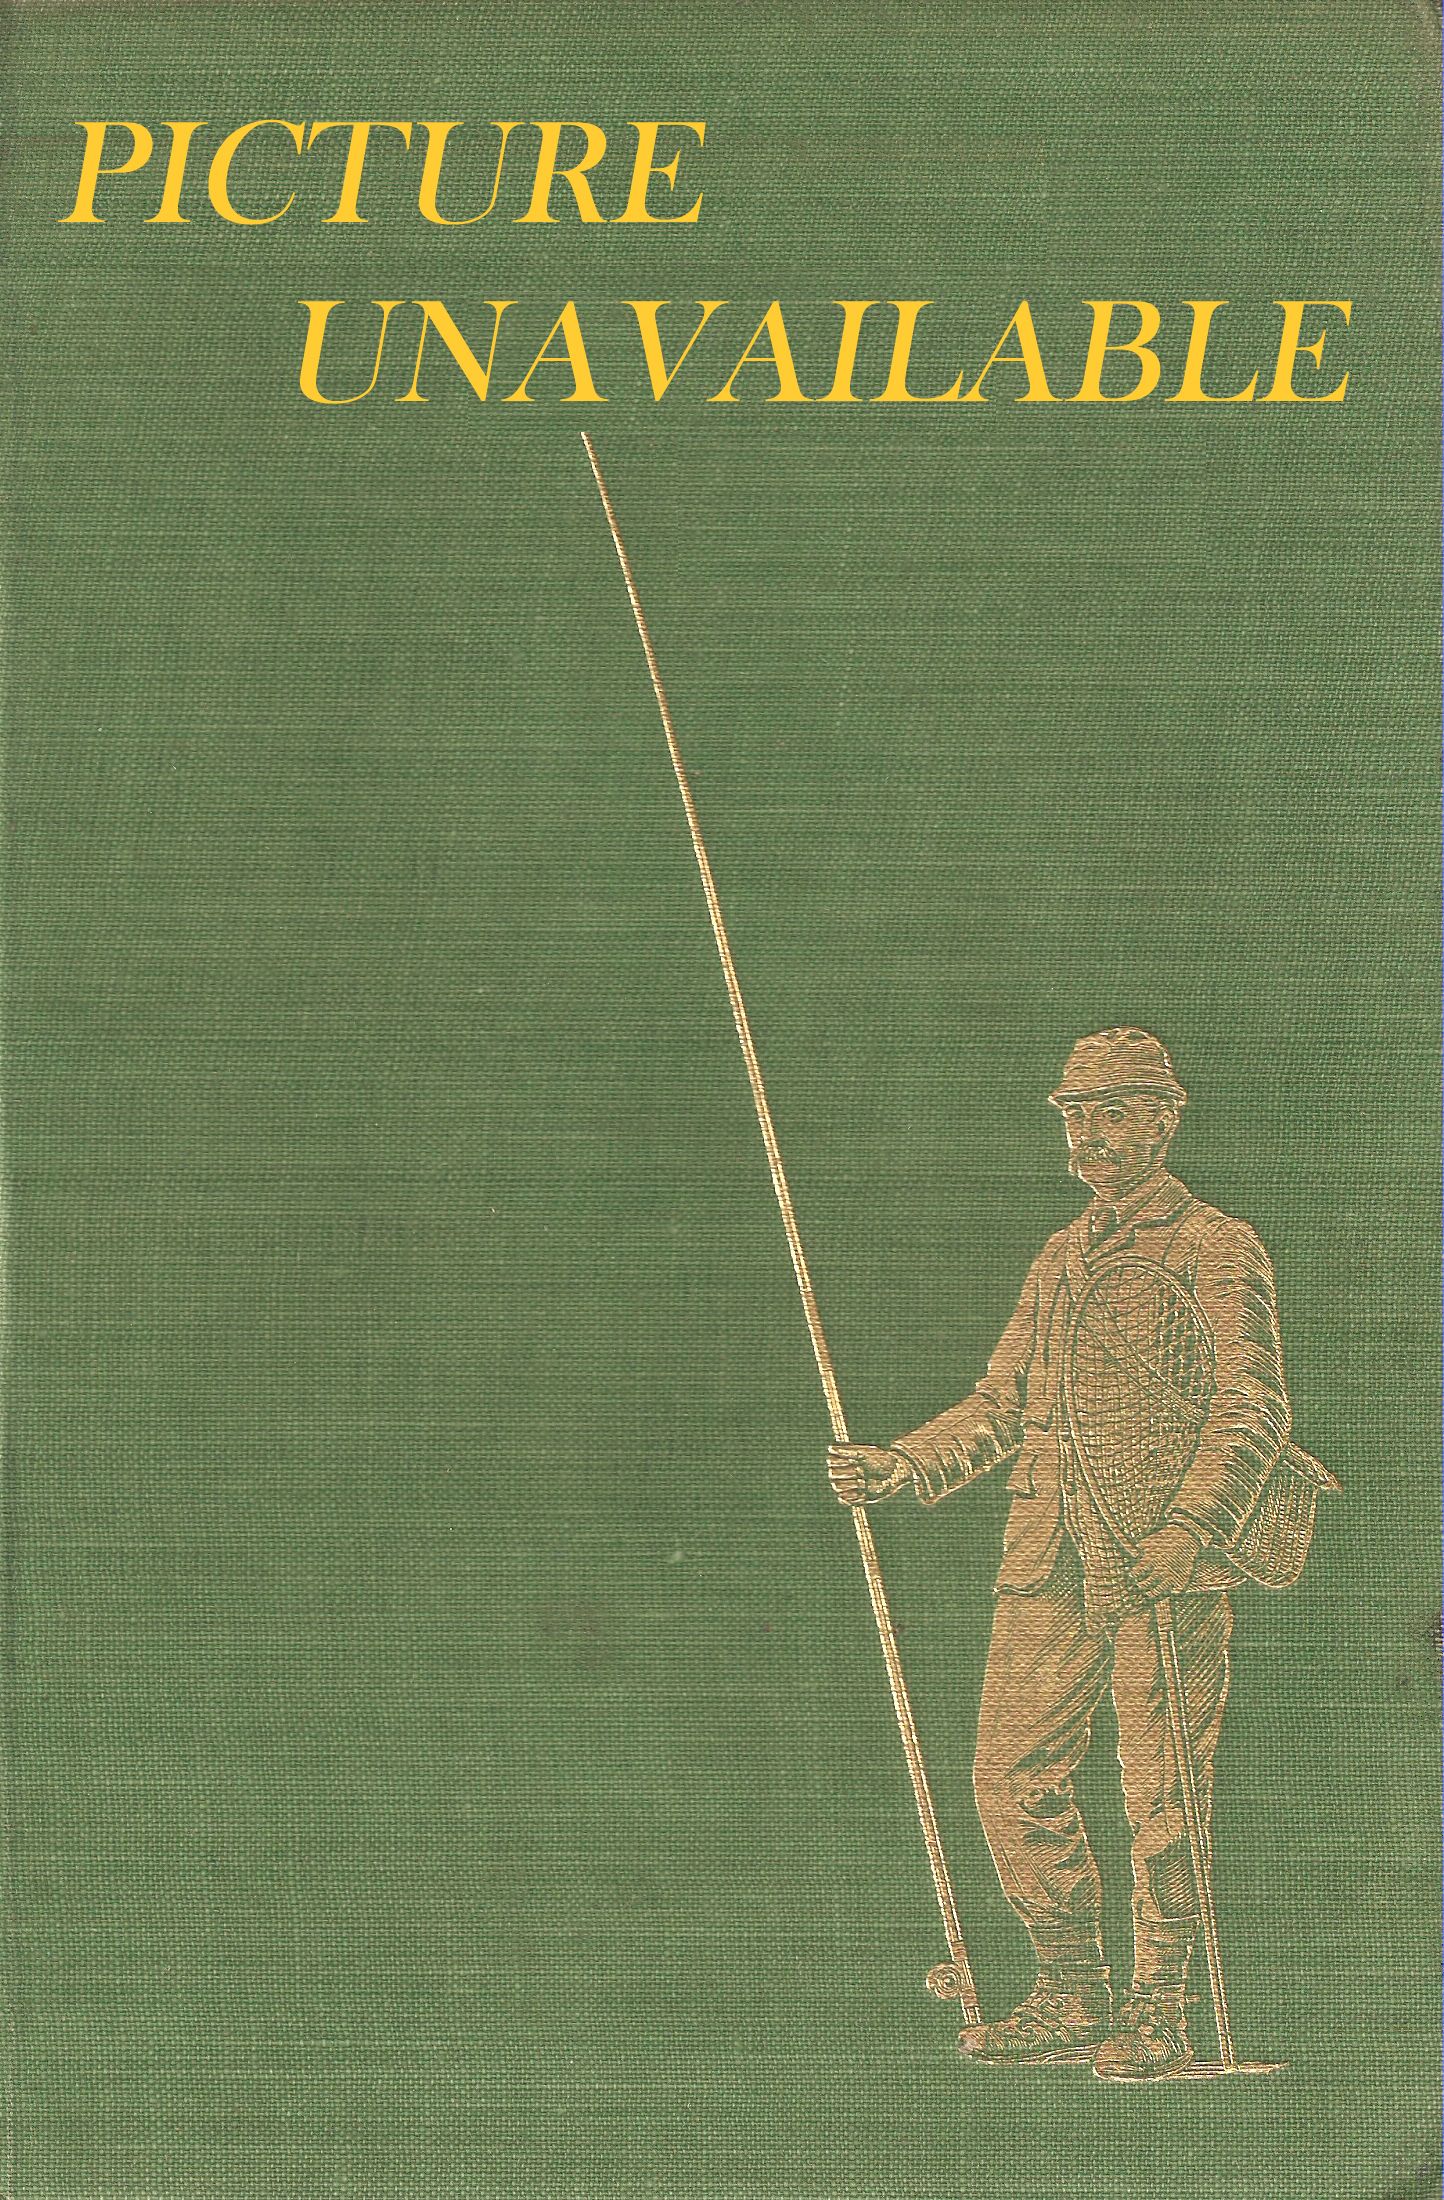 CREEL: A FISHING MAGAZINE. Volume 3, number 7. January 1966.